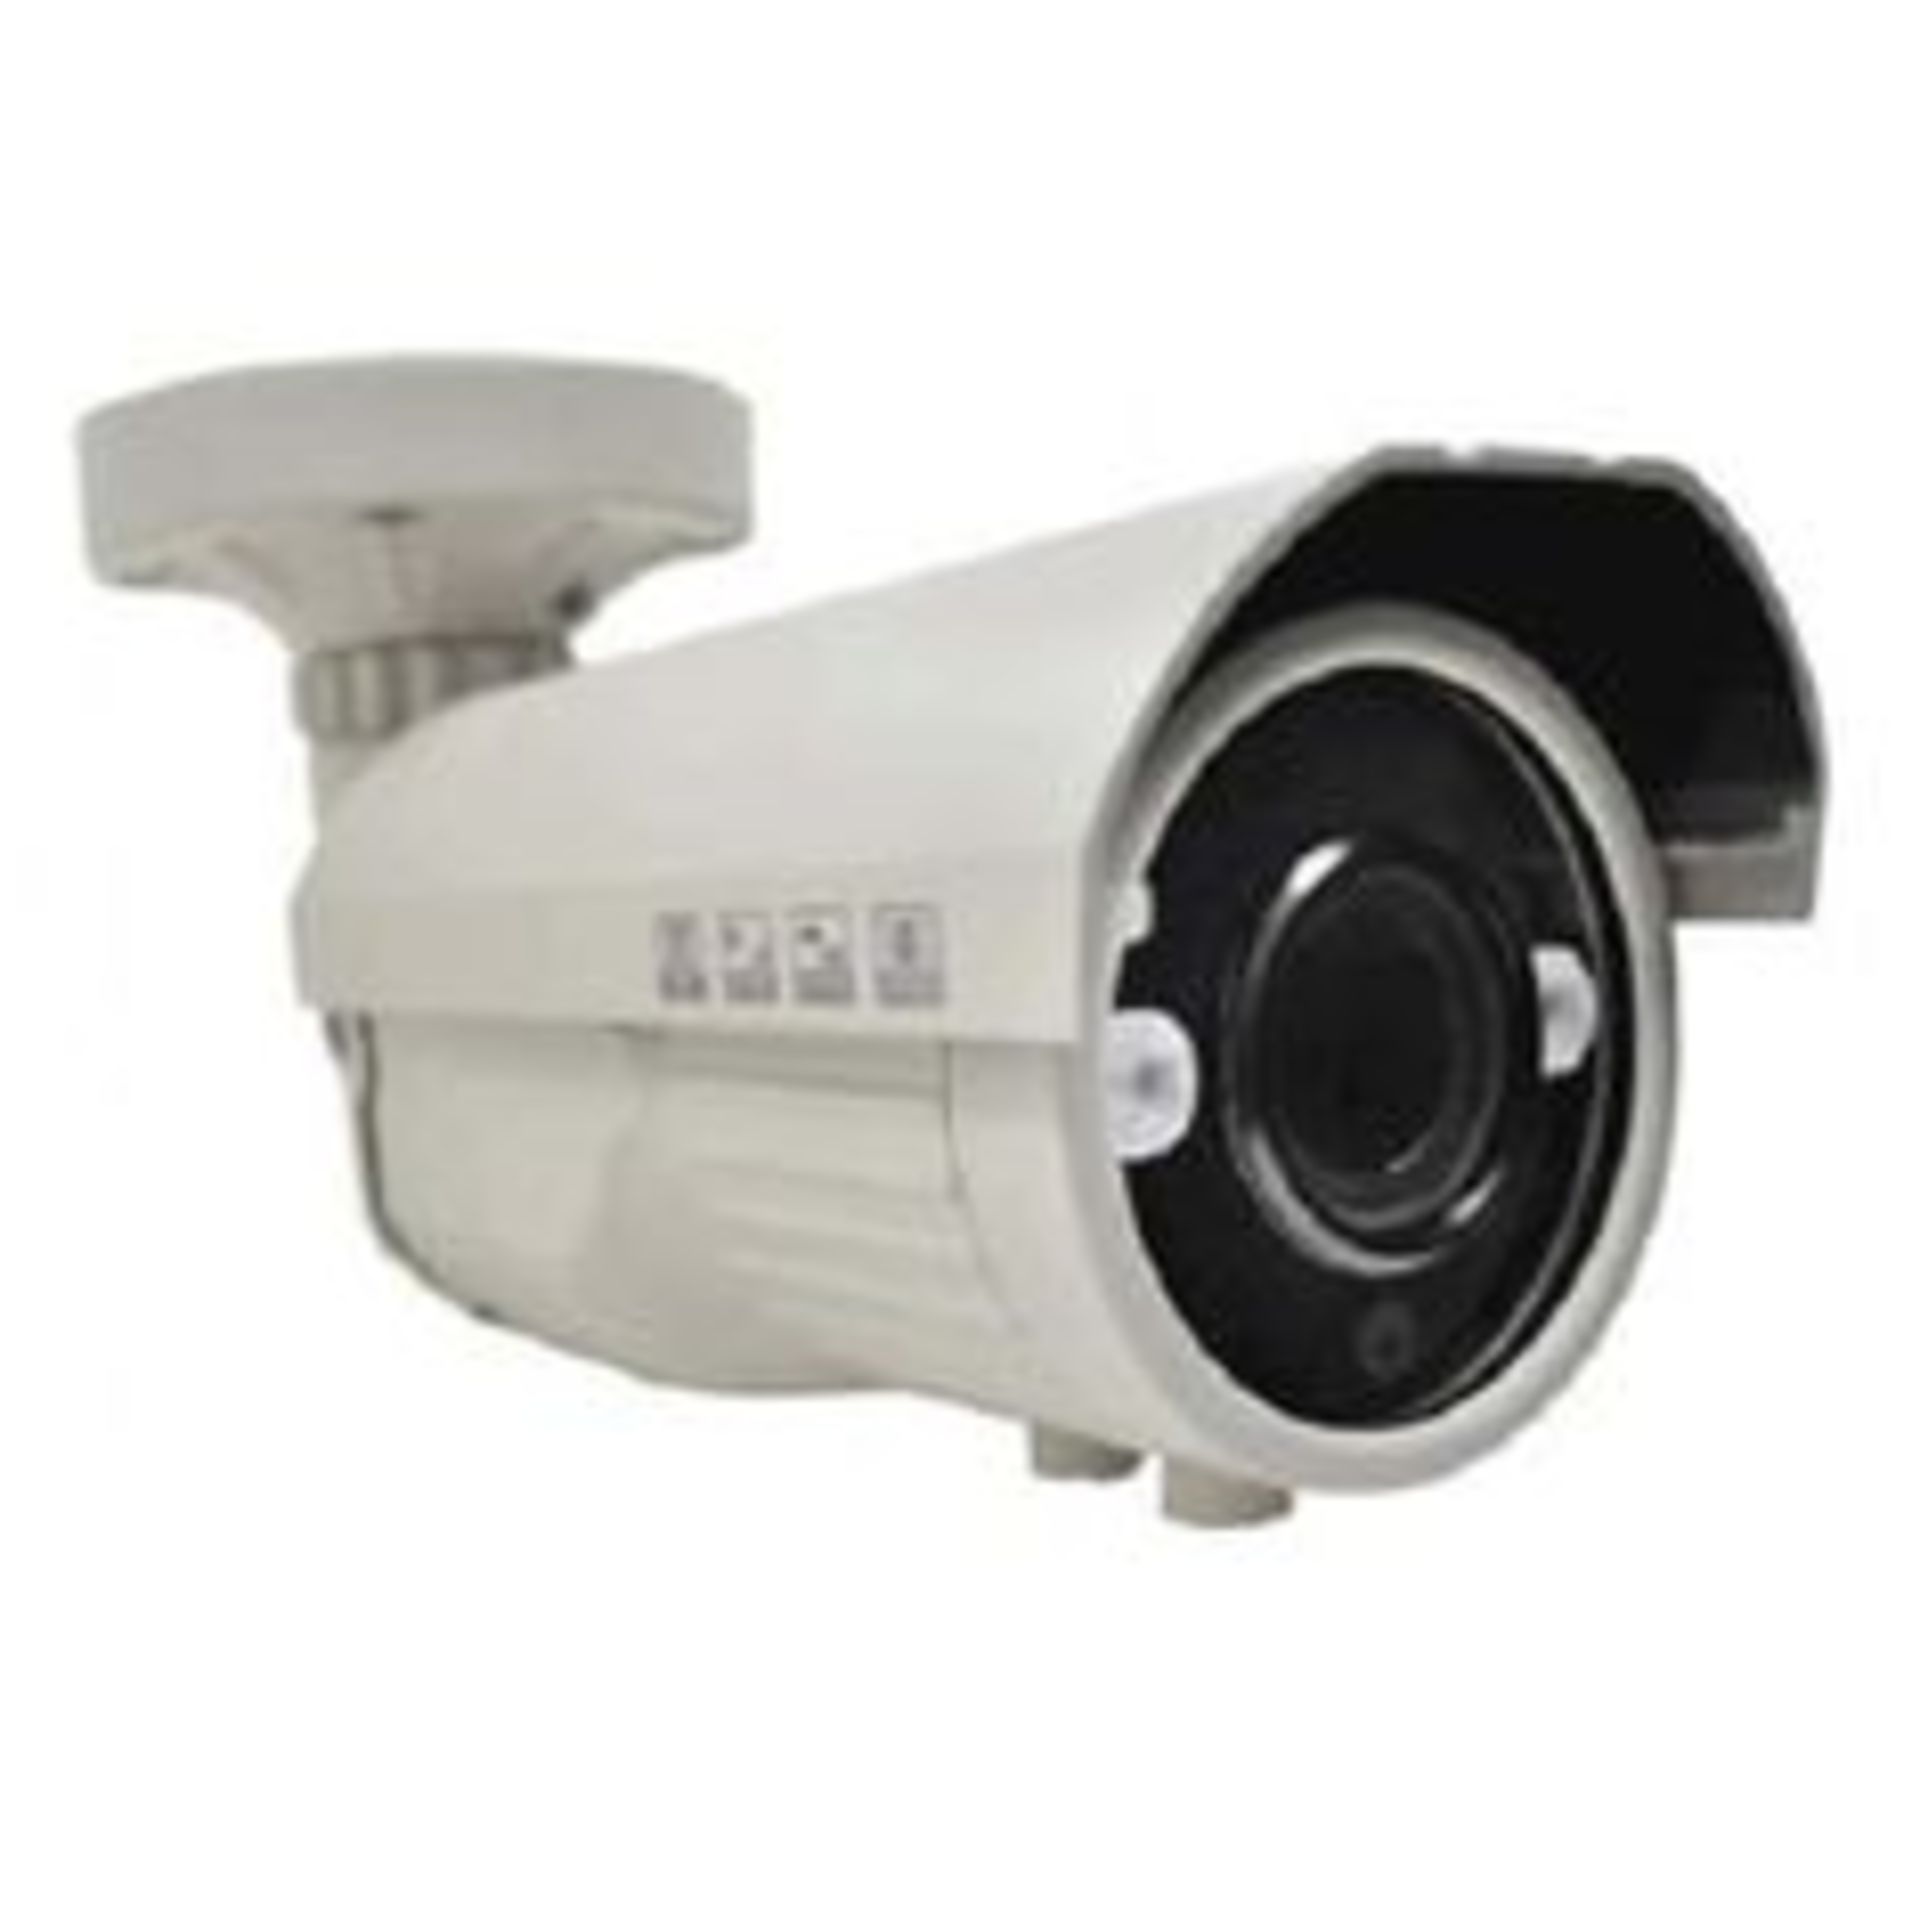 V Brand New Avtech Bullet Camera- 1/3" Sony Colour CCD - 540TVL-25m distance - Weather Resistant